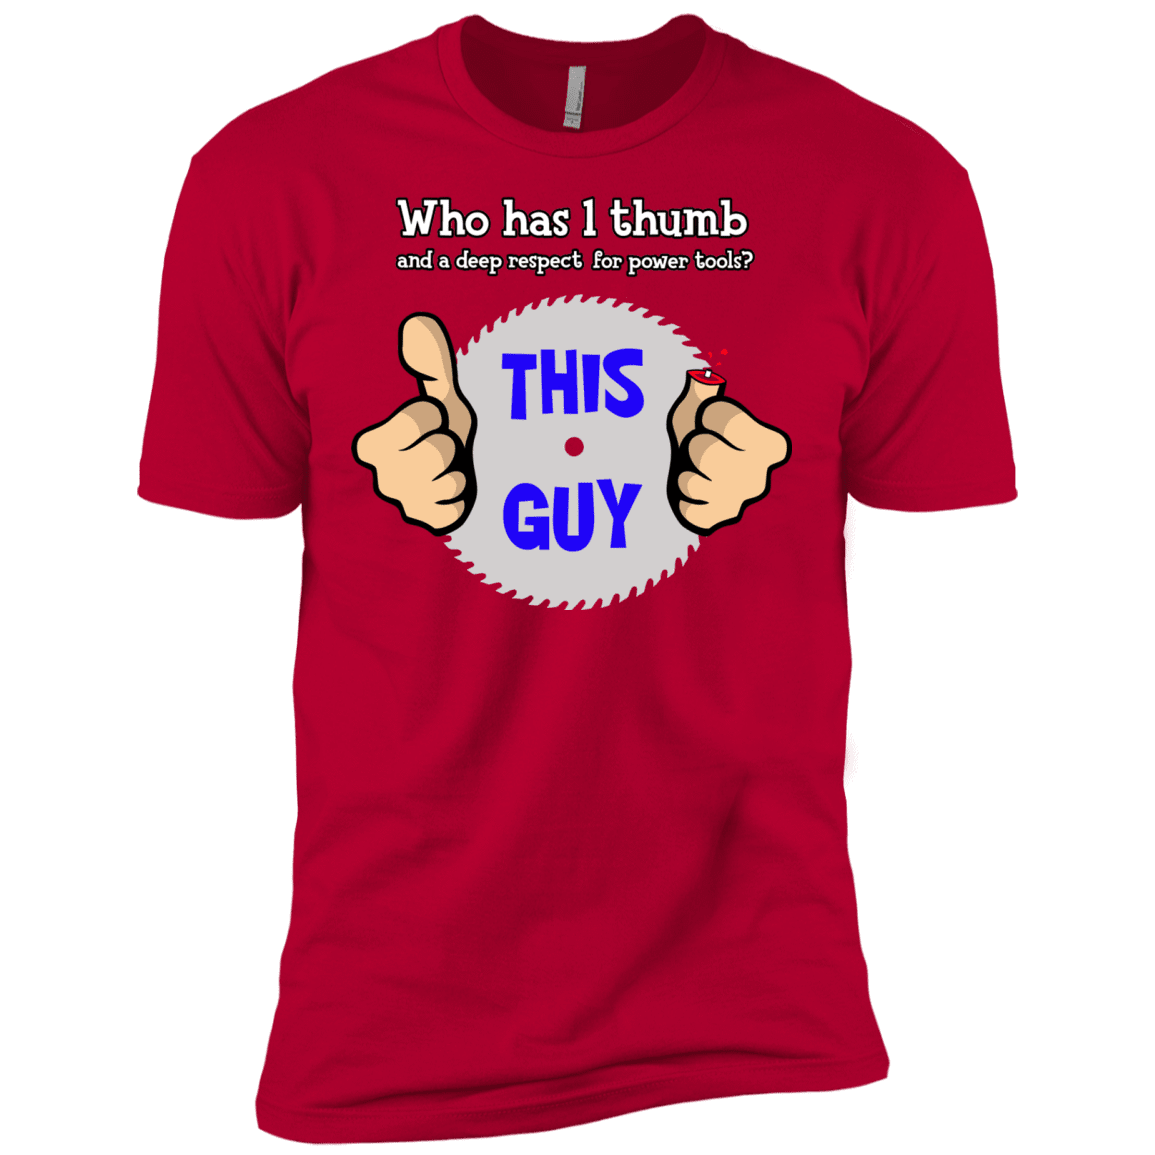 T-Shirts Red / X-Small 1-thumb Men's Premium T-Shirt